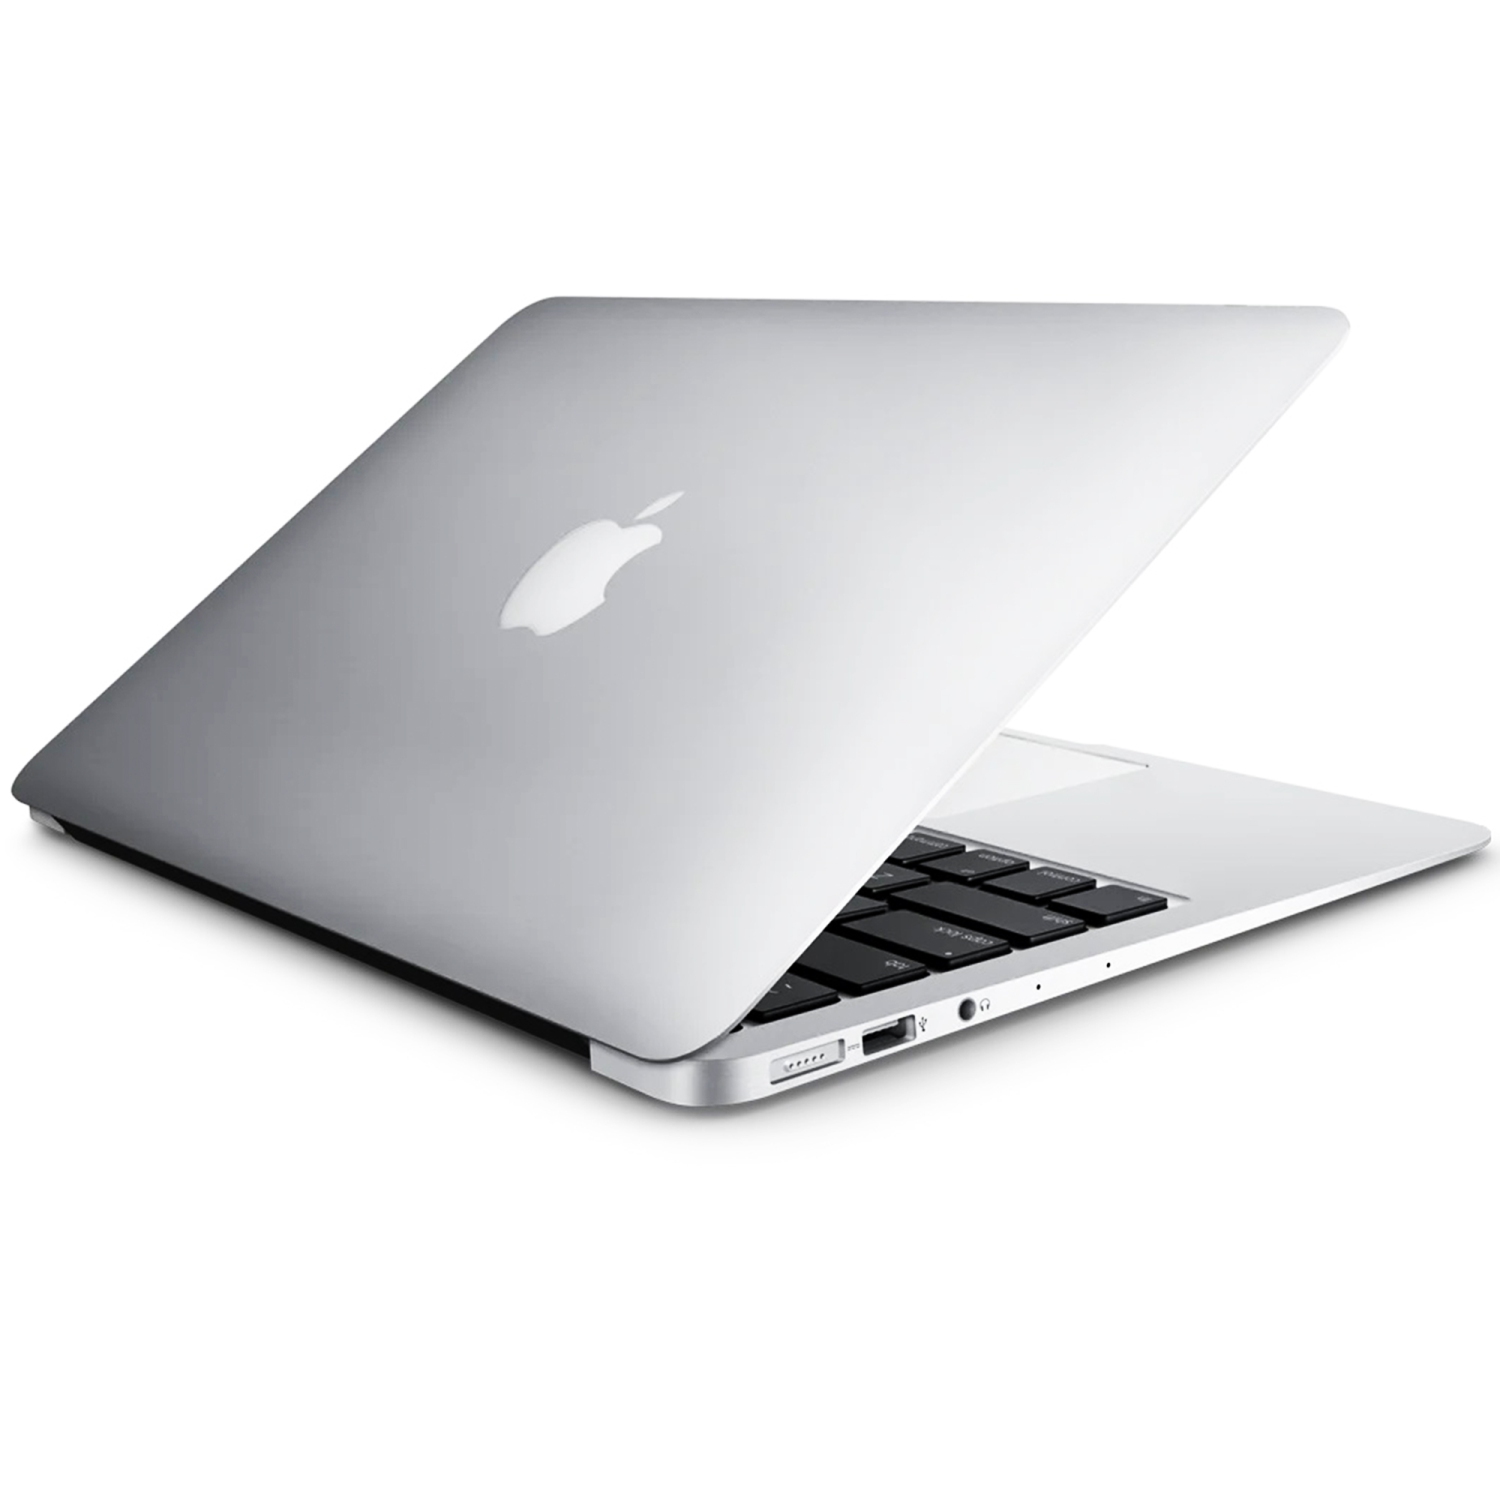 Refurbished (Fair) - Apple MacBook Air A1466 Laptop, 13.3 inch 